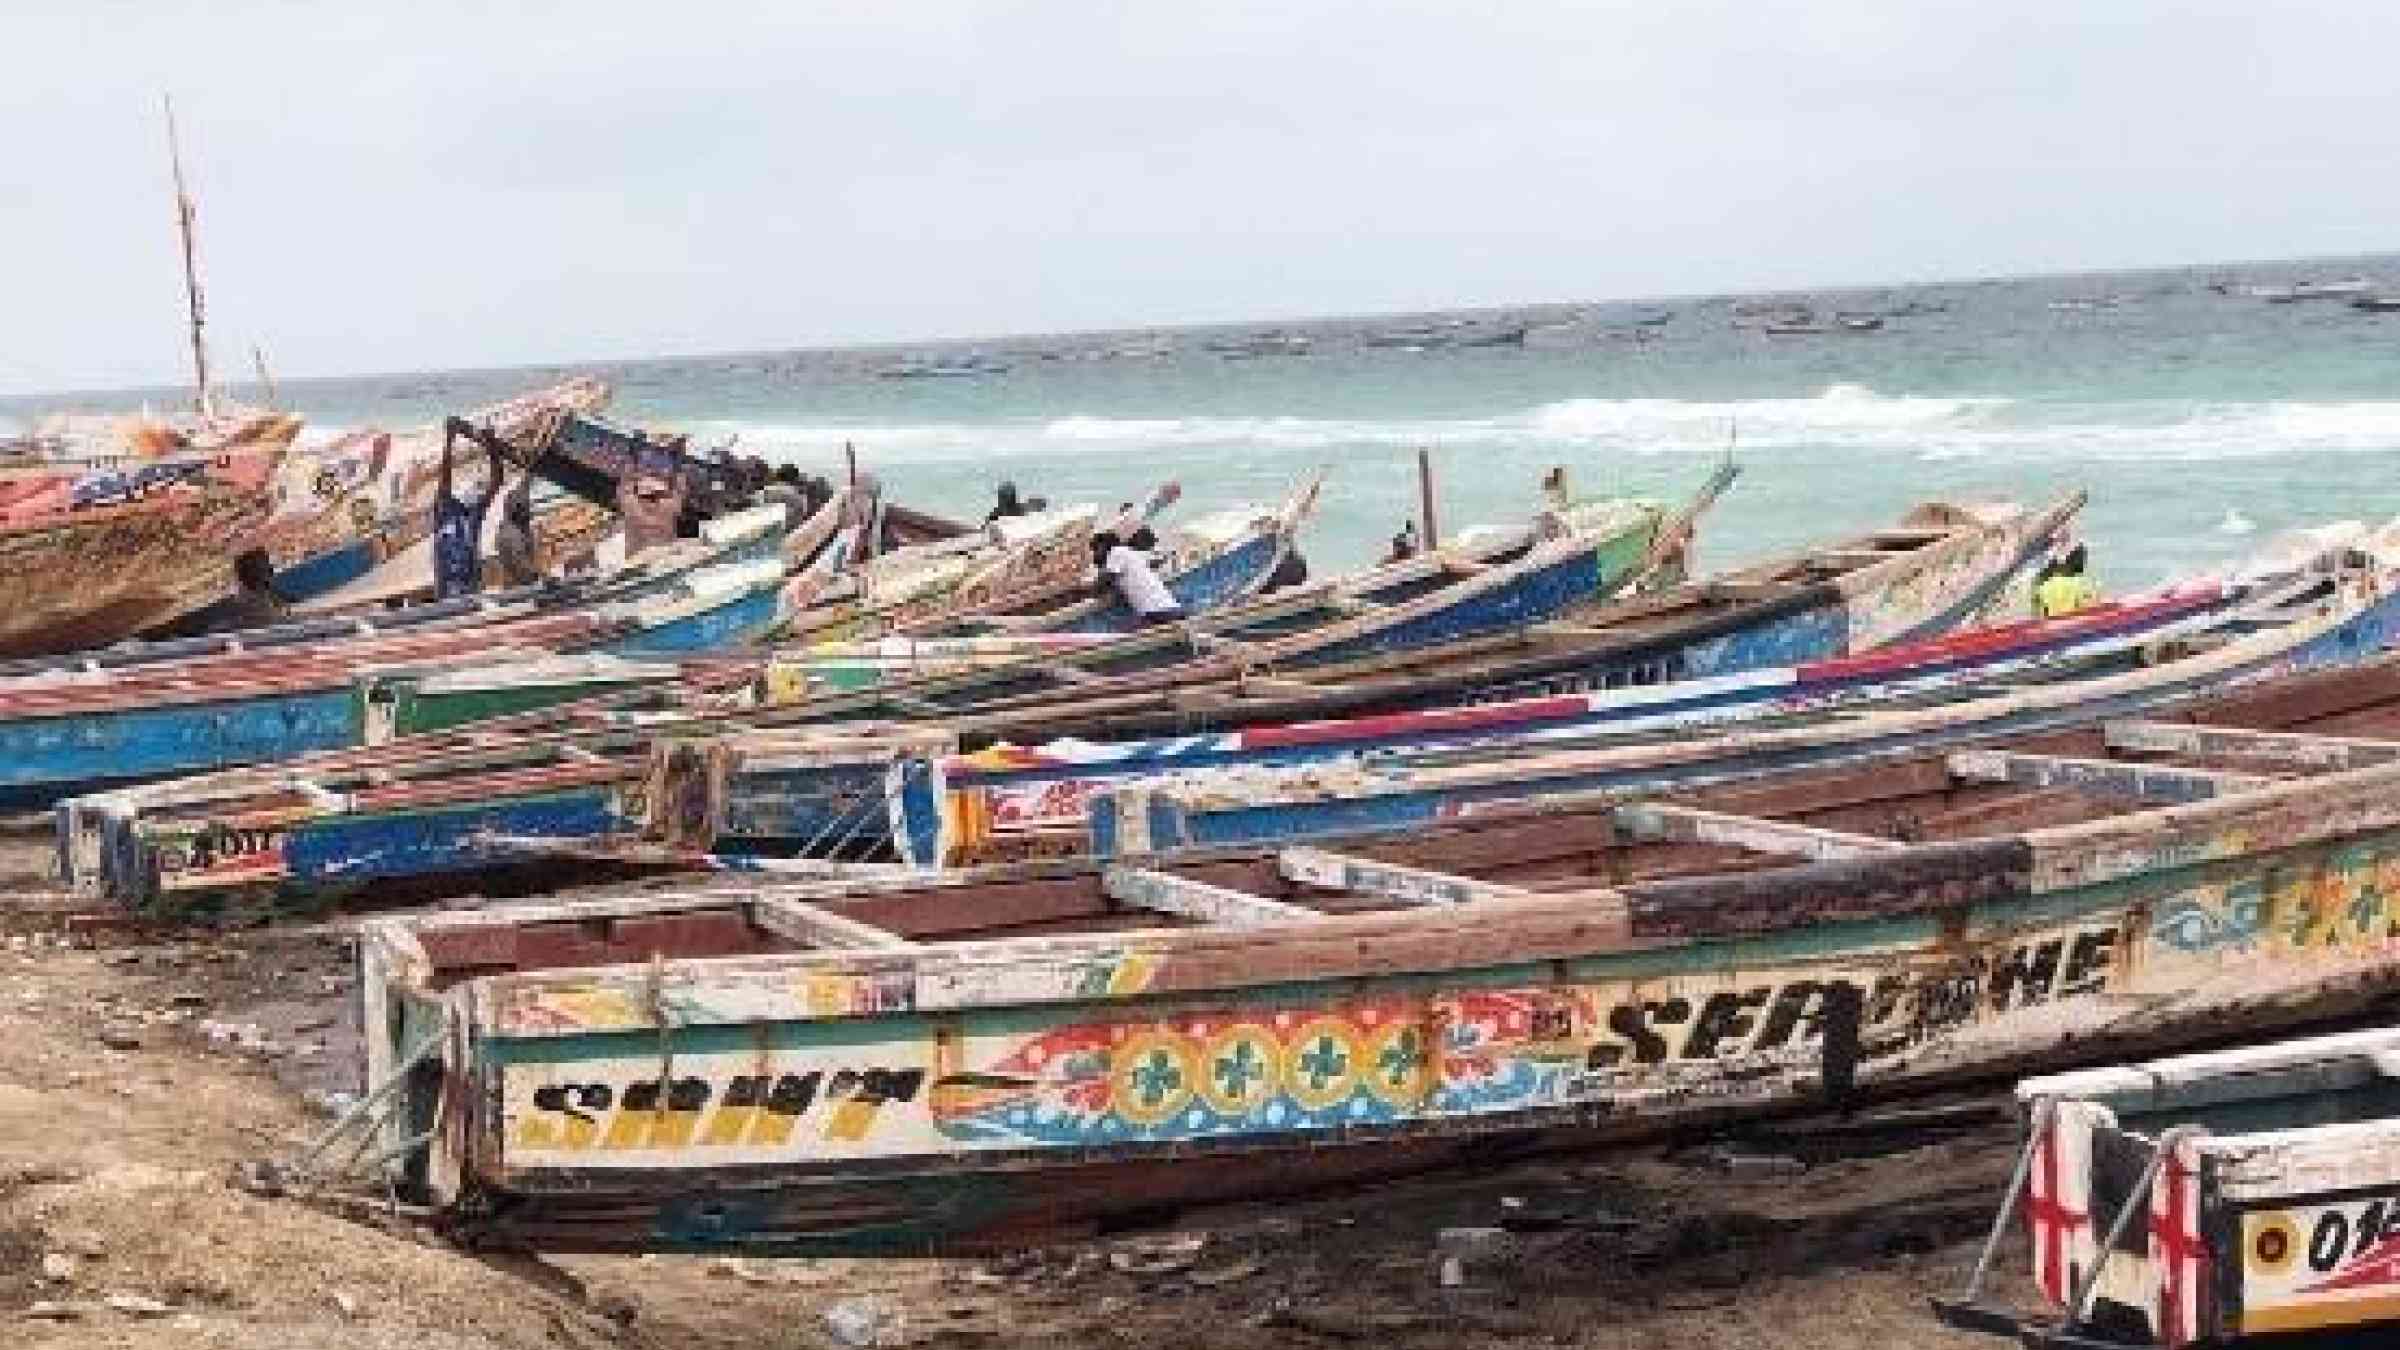 Fishing boats lined up at Port de Peche on the coast of Nouakchott, Mauritania